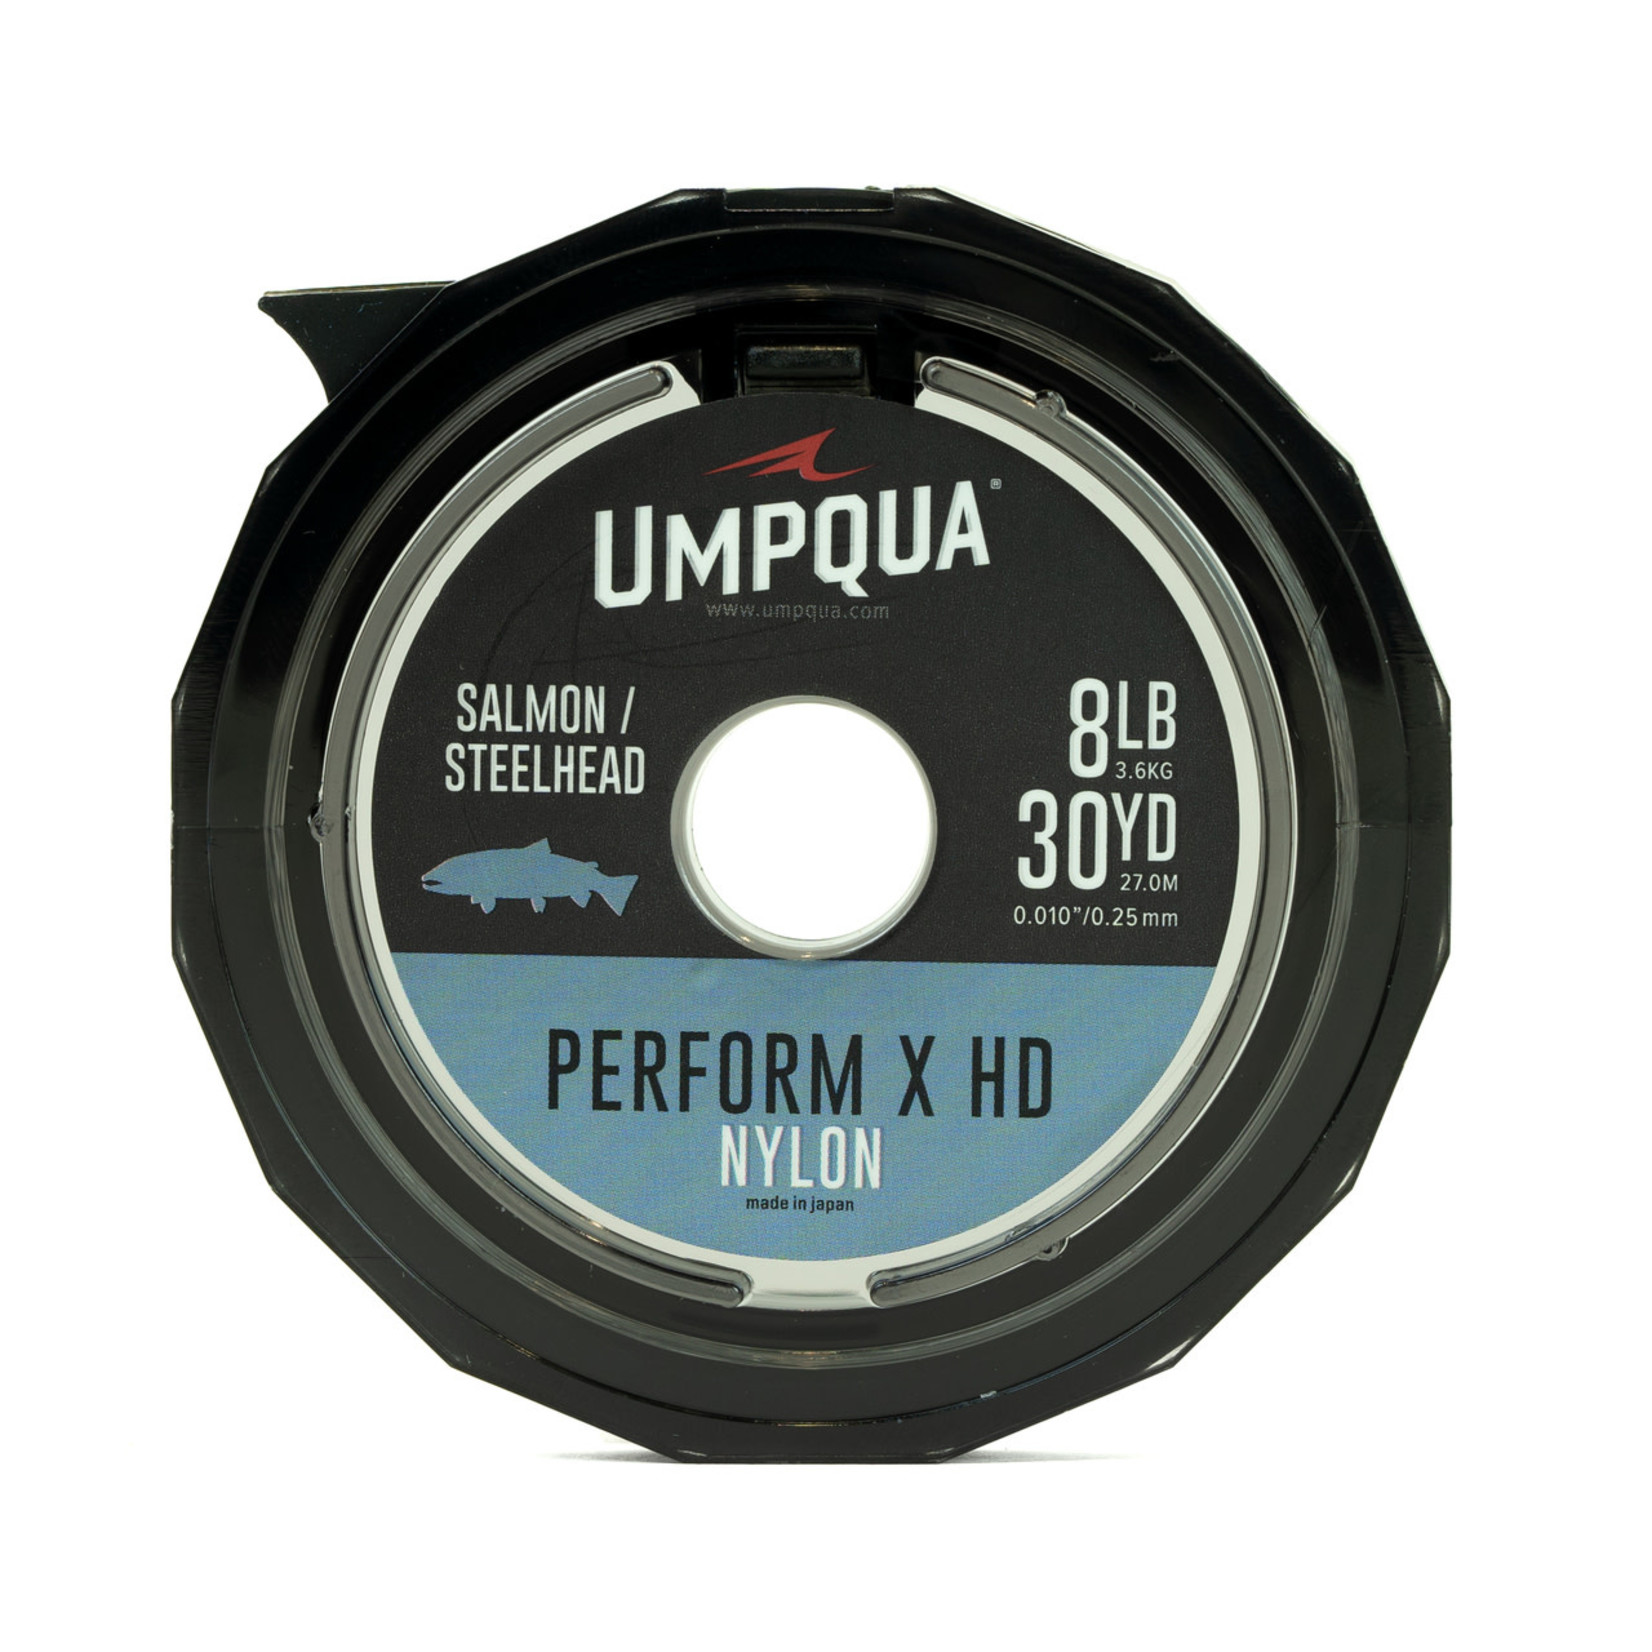 Umpqua Umpqua PERFORM X HD SALM/STLHD NYL(30 YDS) 16LB